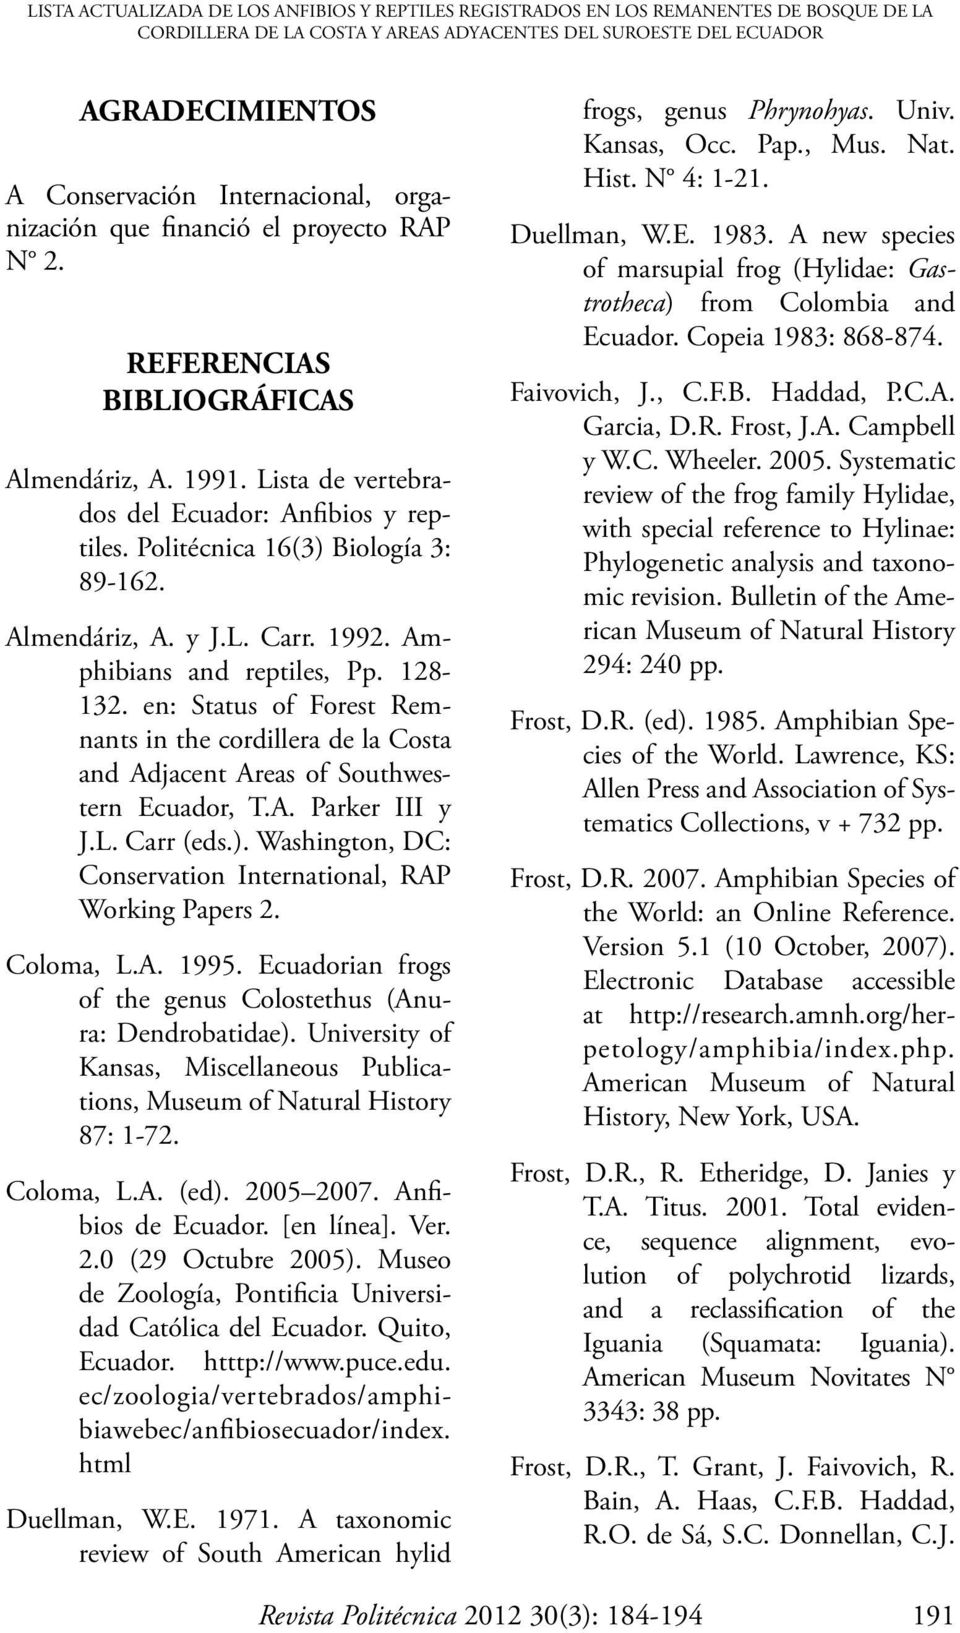 L. arr. 1992. Amphibians and reptiles, Pp. 128-132. en: Status of Forest Remnants in the cordillera de la osta and Adjacent Areas of Southwestern Ecuador, T.A. Parker III y J.L. arr (eds.).